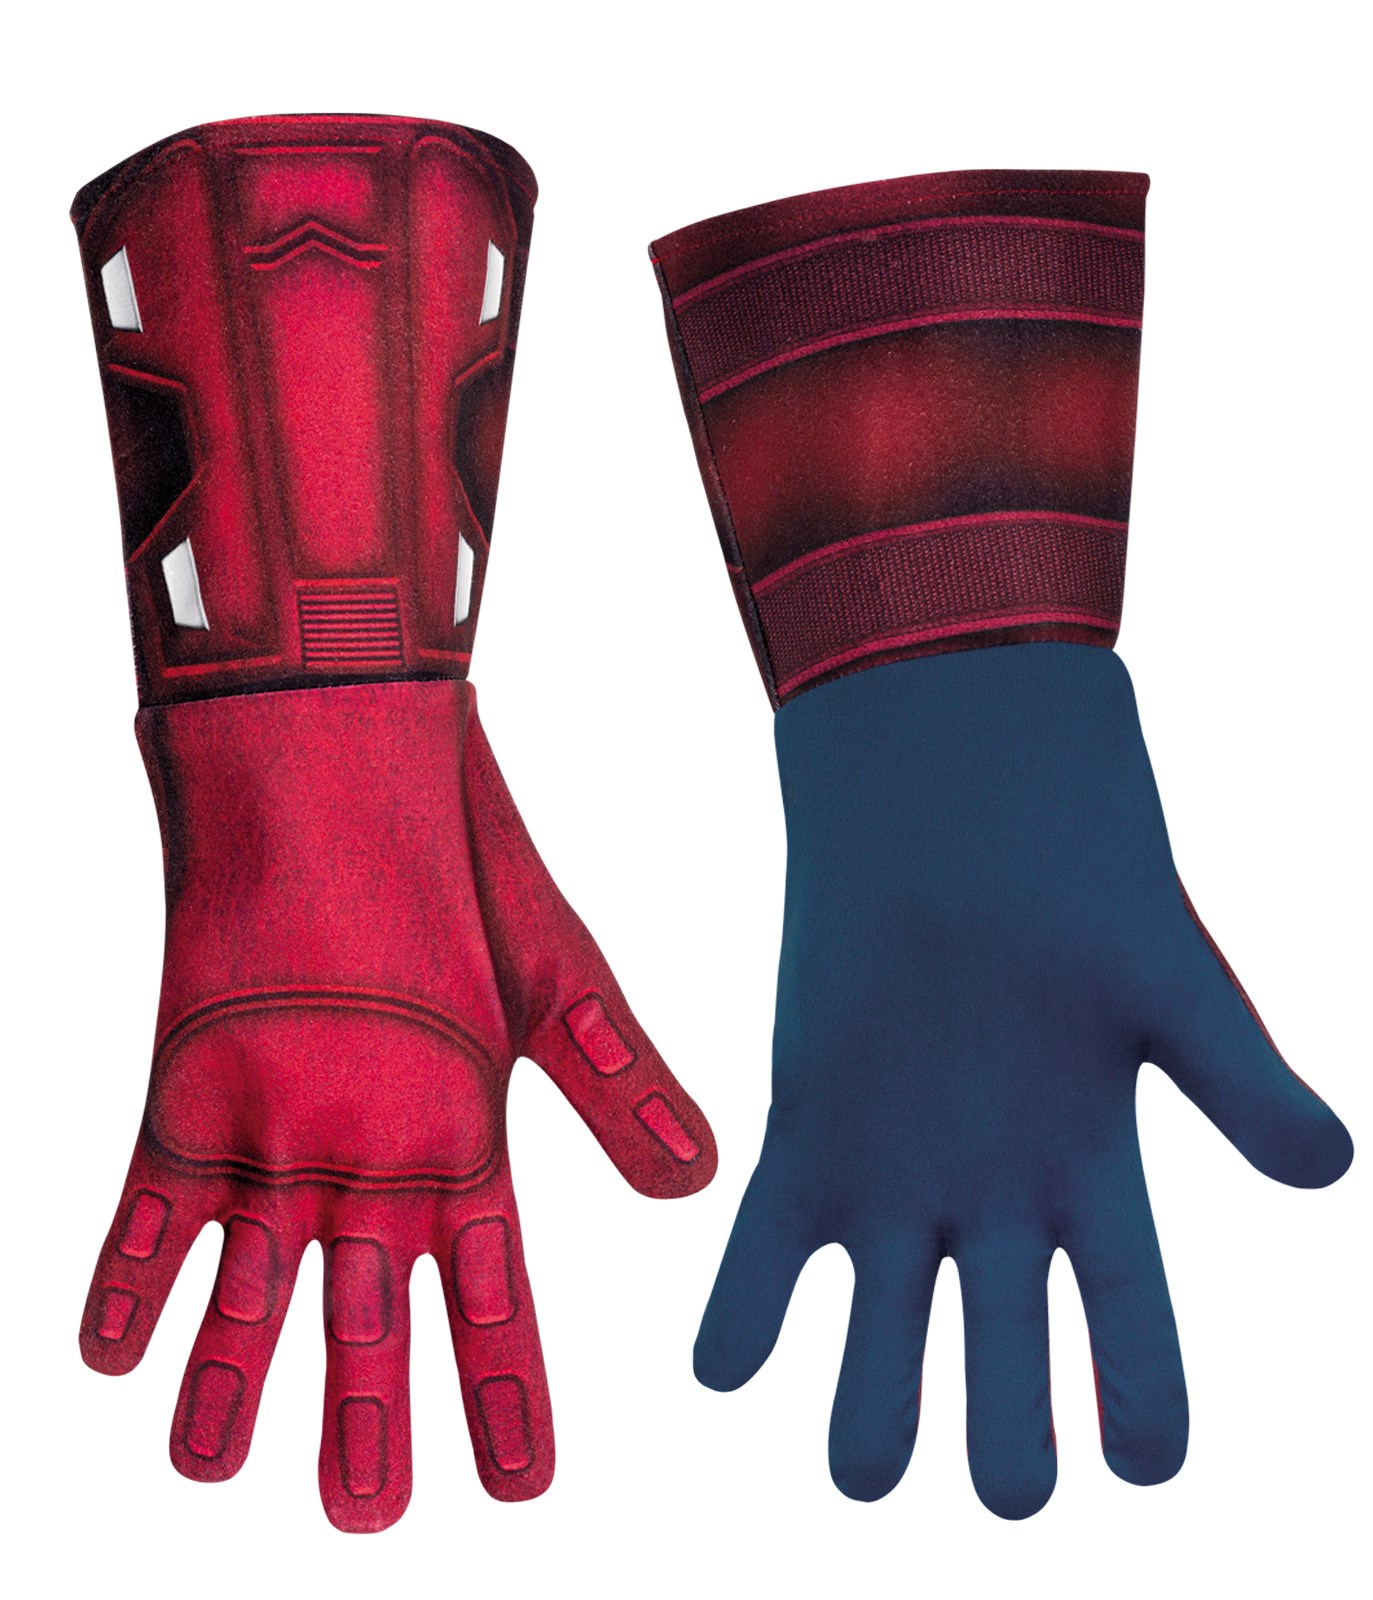 The Avengers Captain America Deluxe Gloves Adult